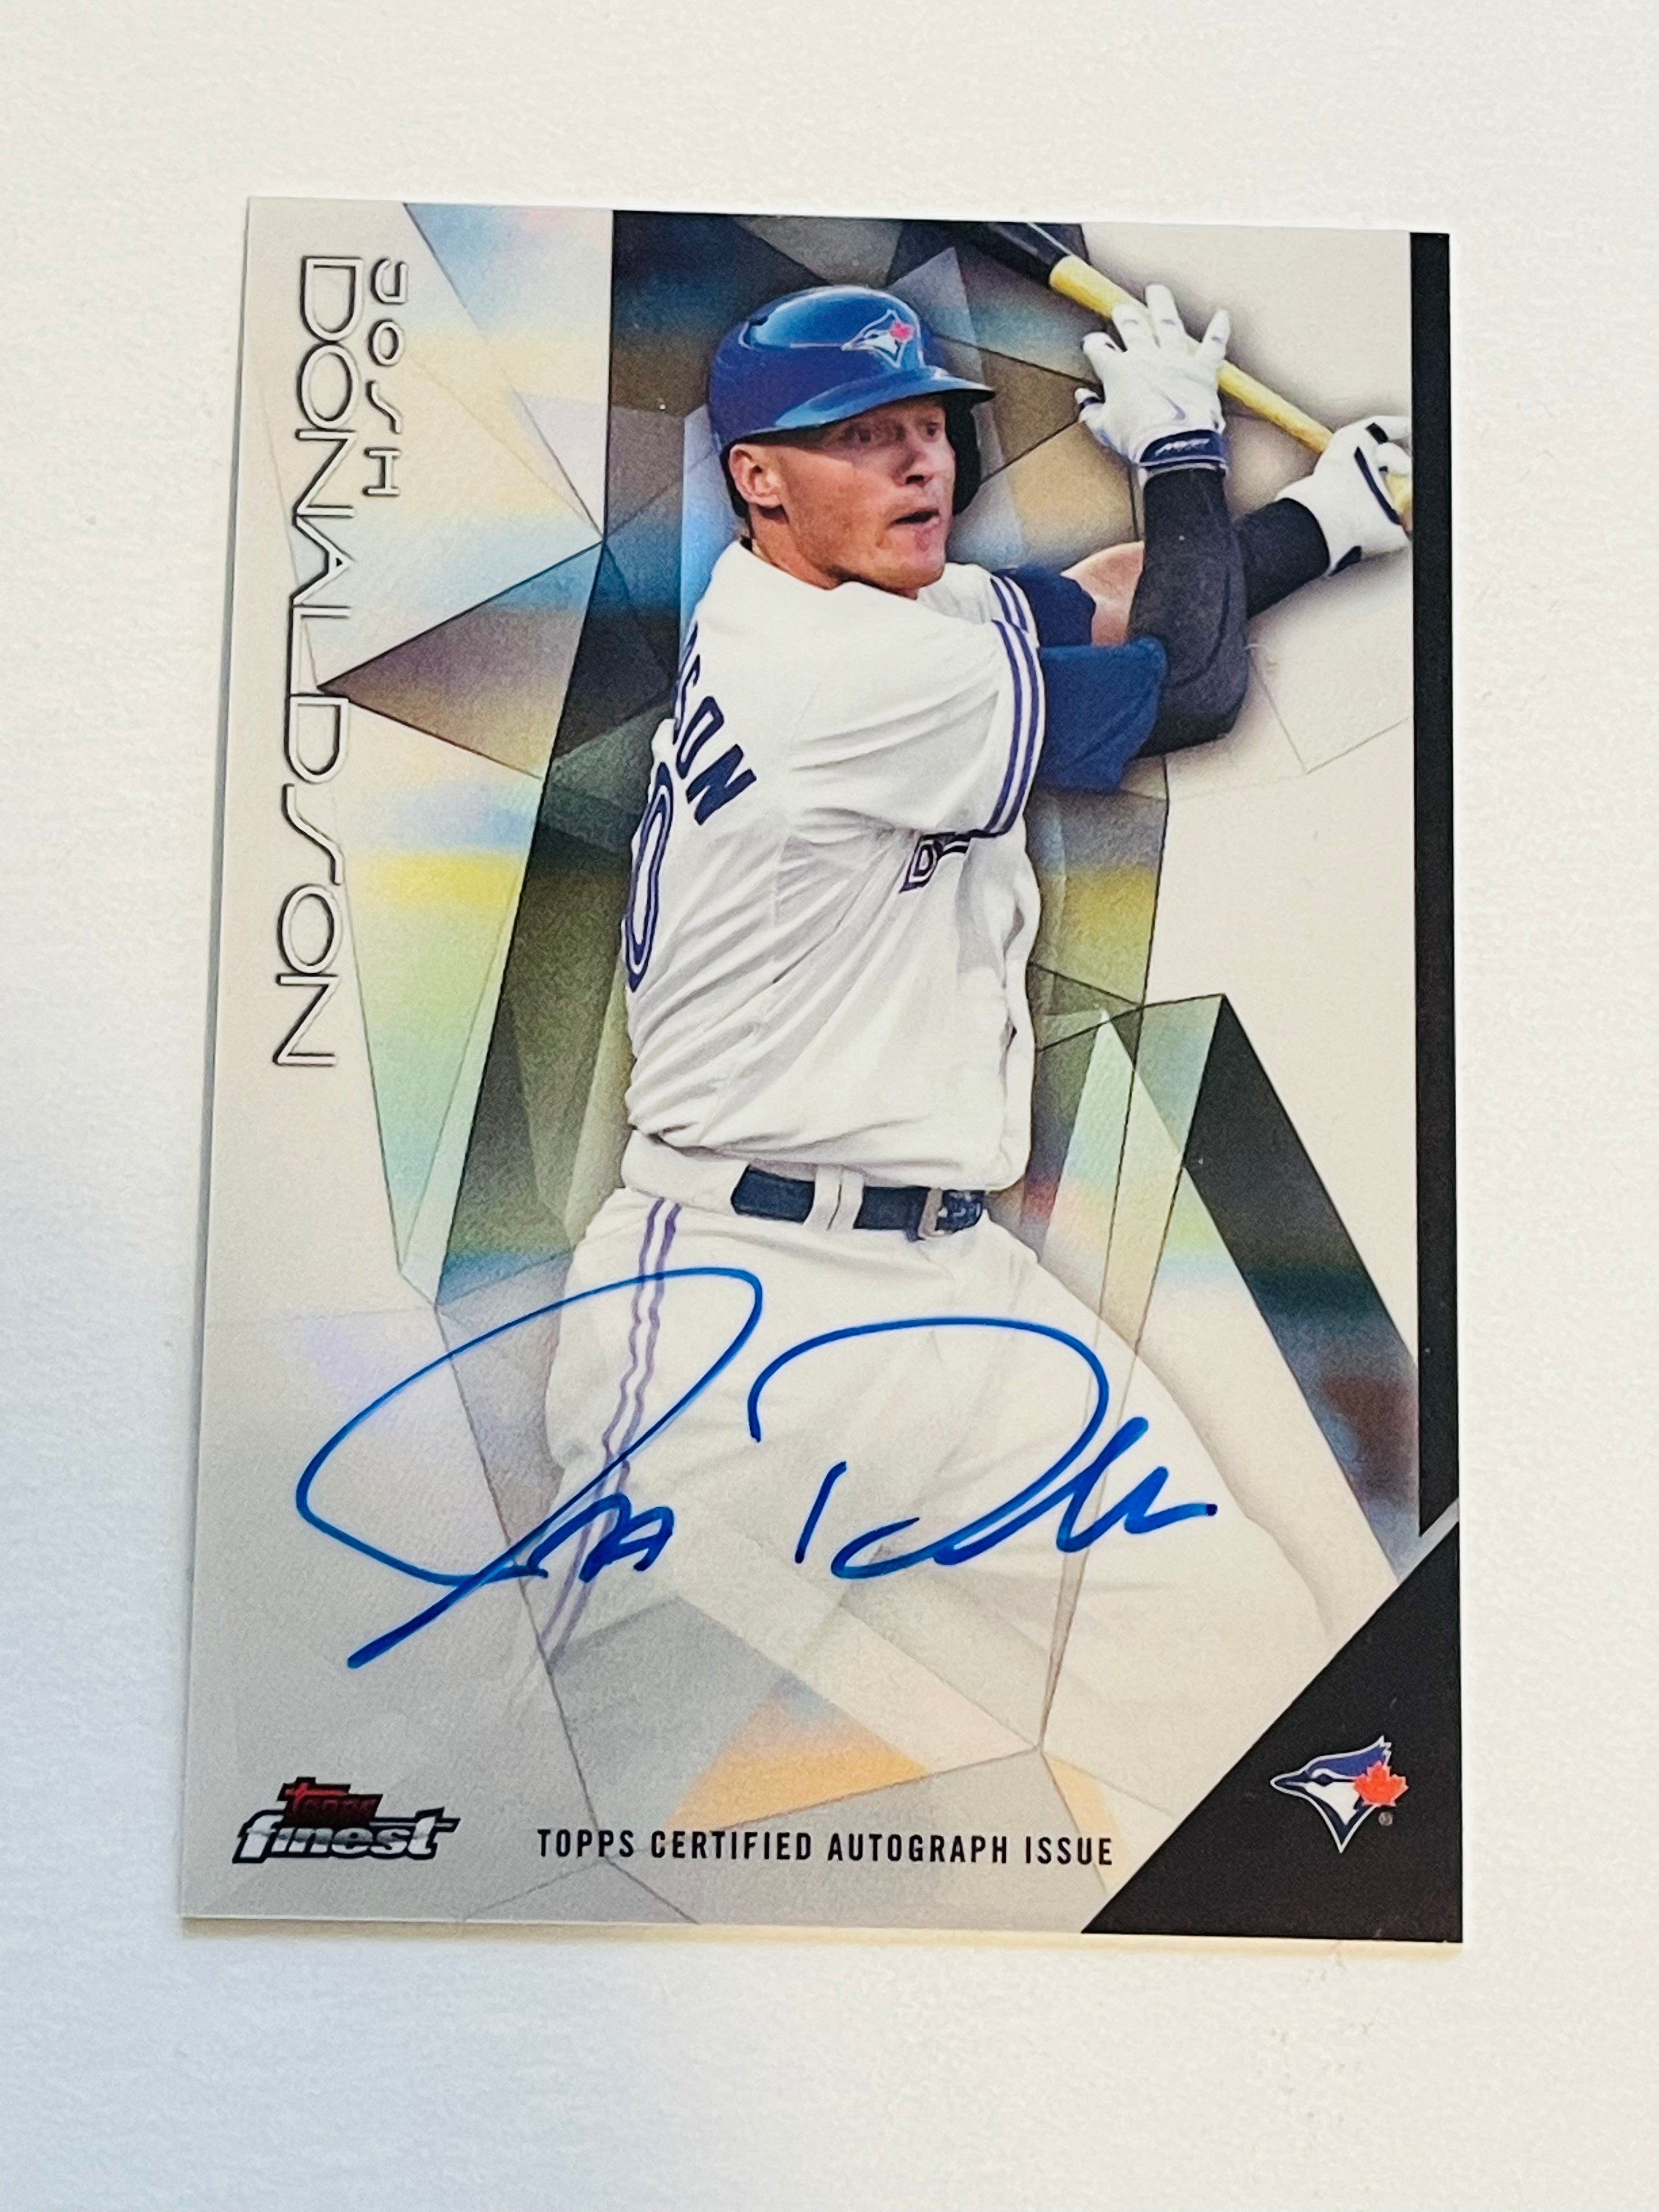 Toronto Blue jays Josh Donaldson Topps finest autograph insert baseball card